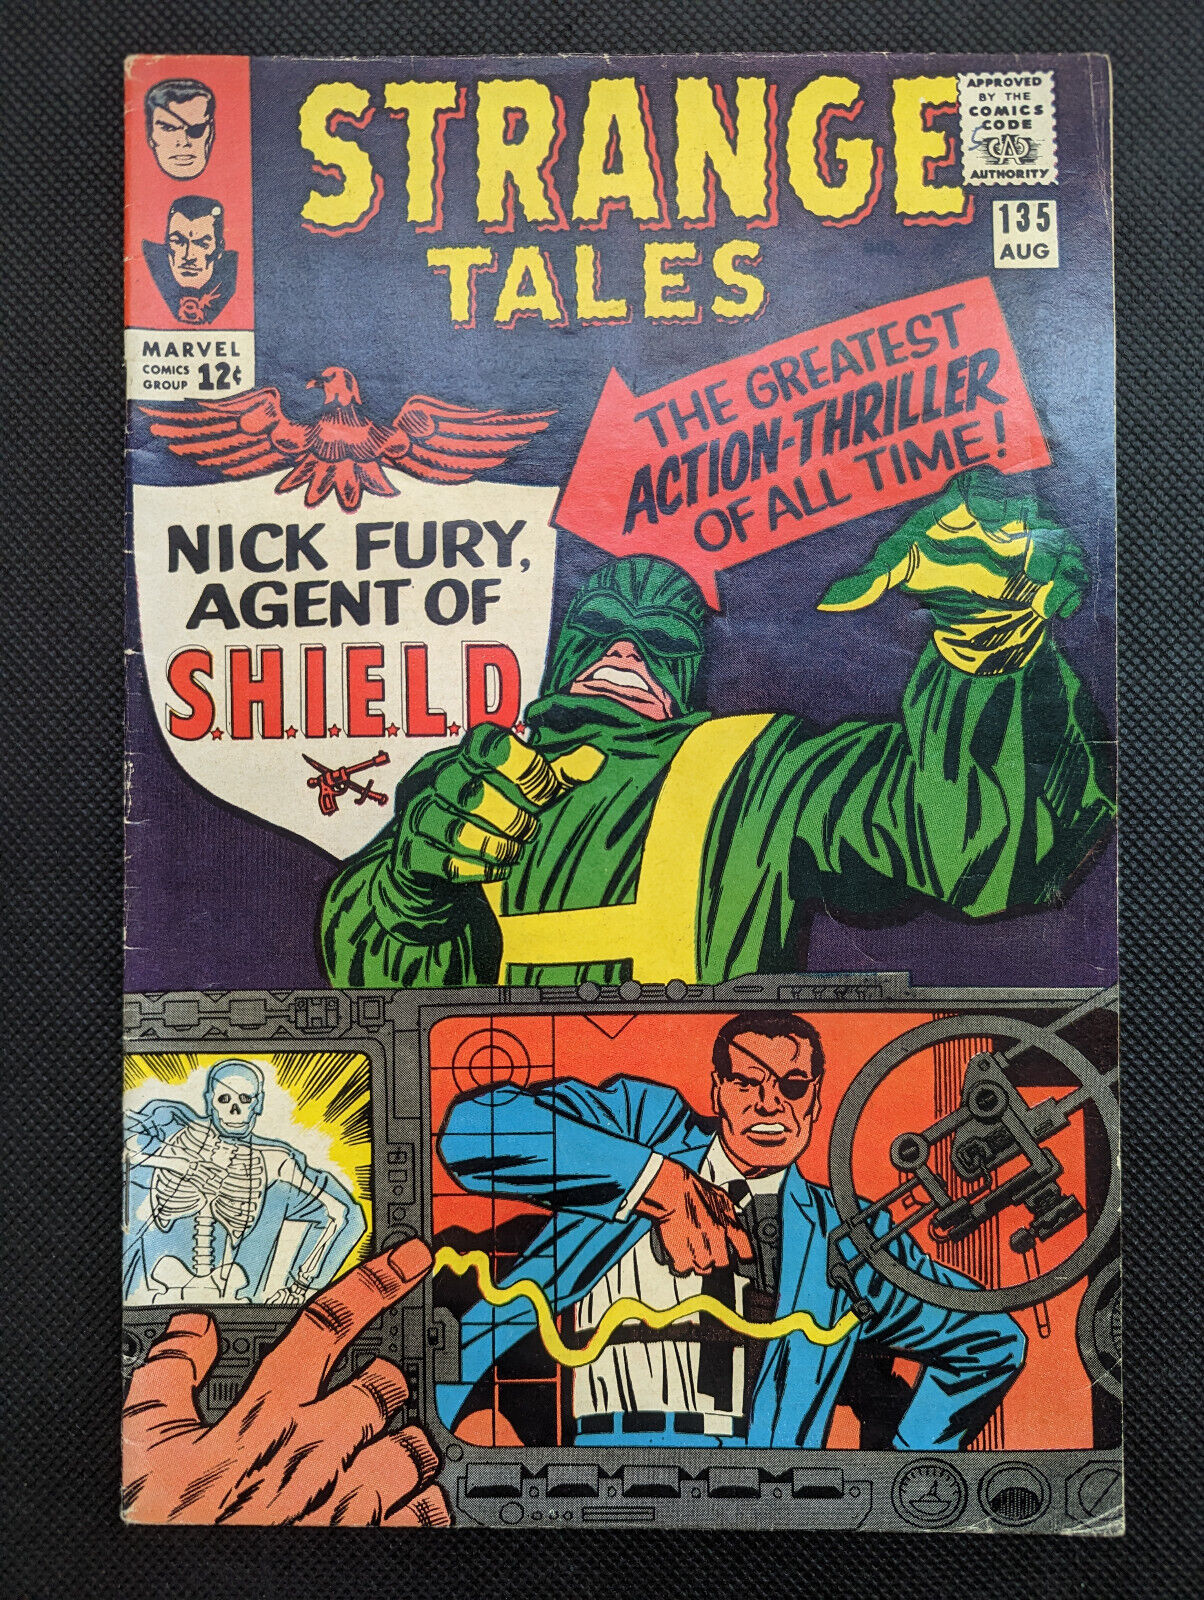 Strange Tales #135 (1965)  1st app HYDRA & SHIELD & NICK FURY as Agent of SHIELD